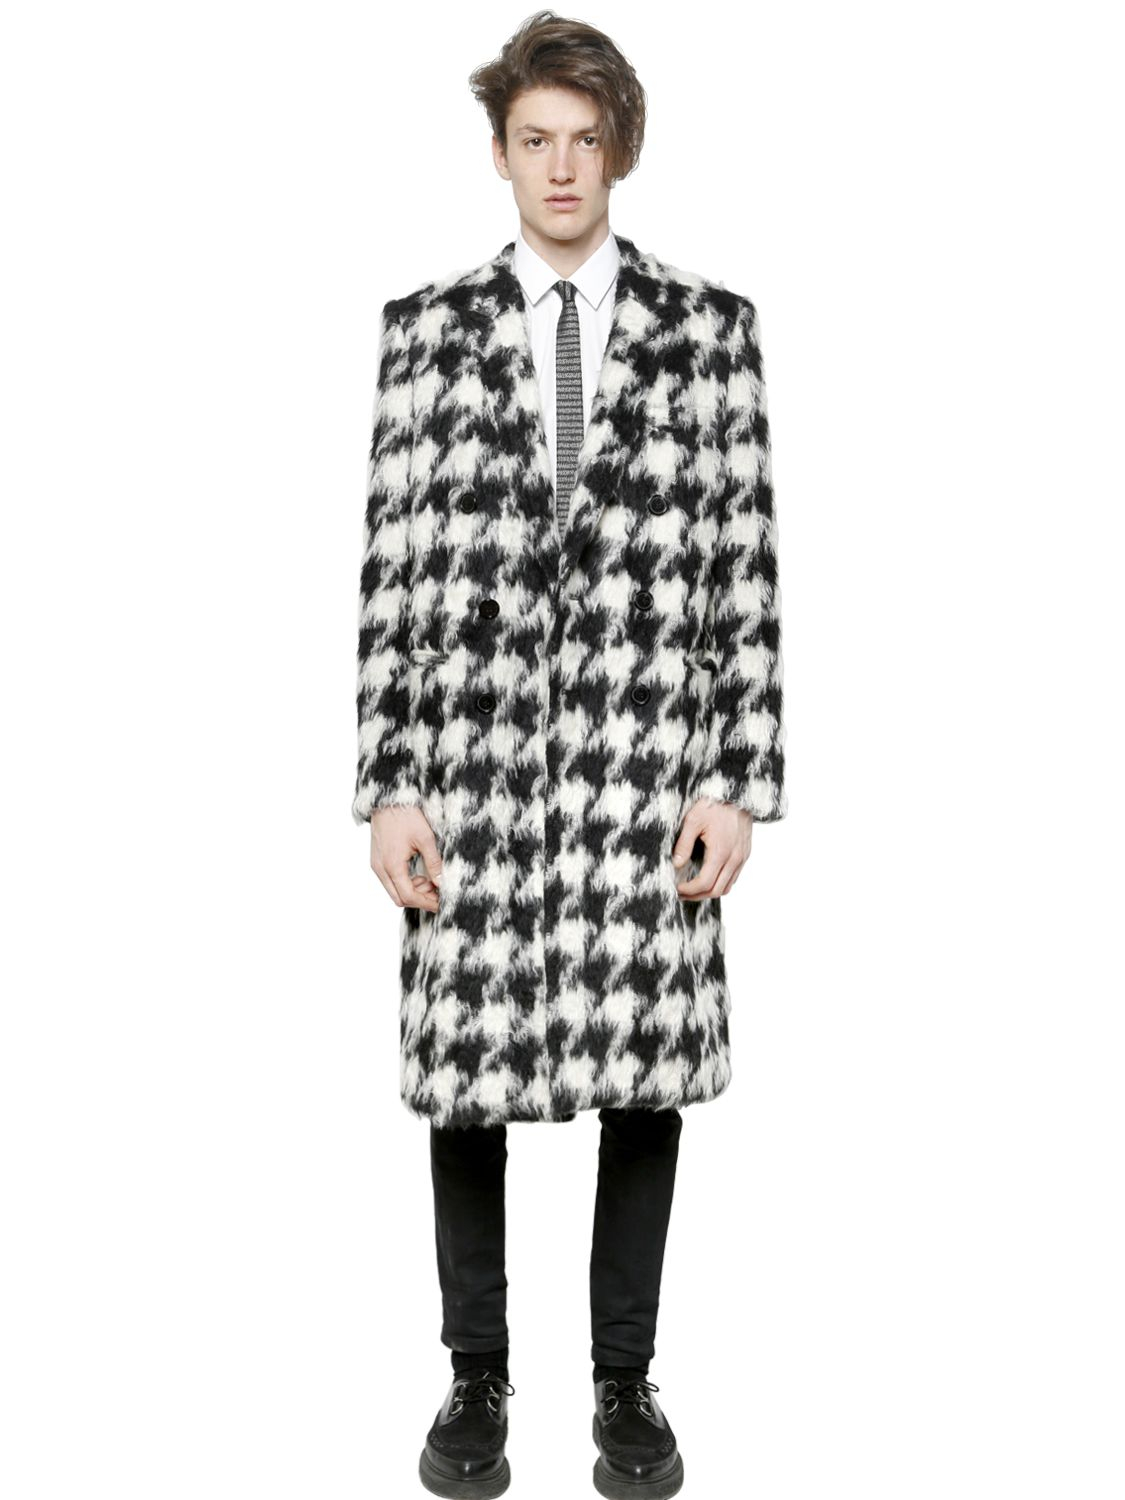 Lyst - Saint Laurent Houndstooth Wool Blend Coat in Black for Men